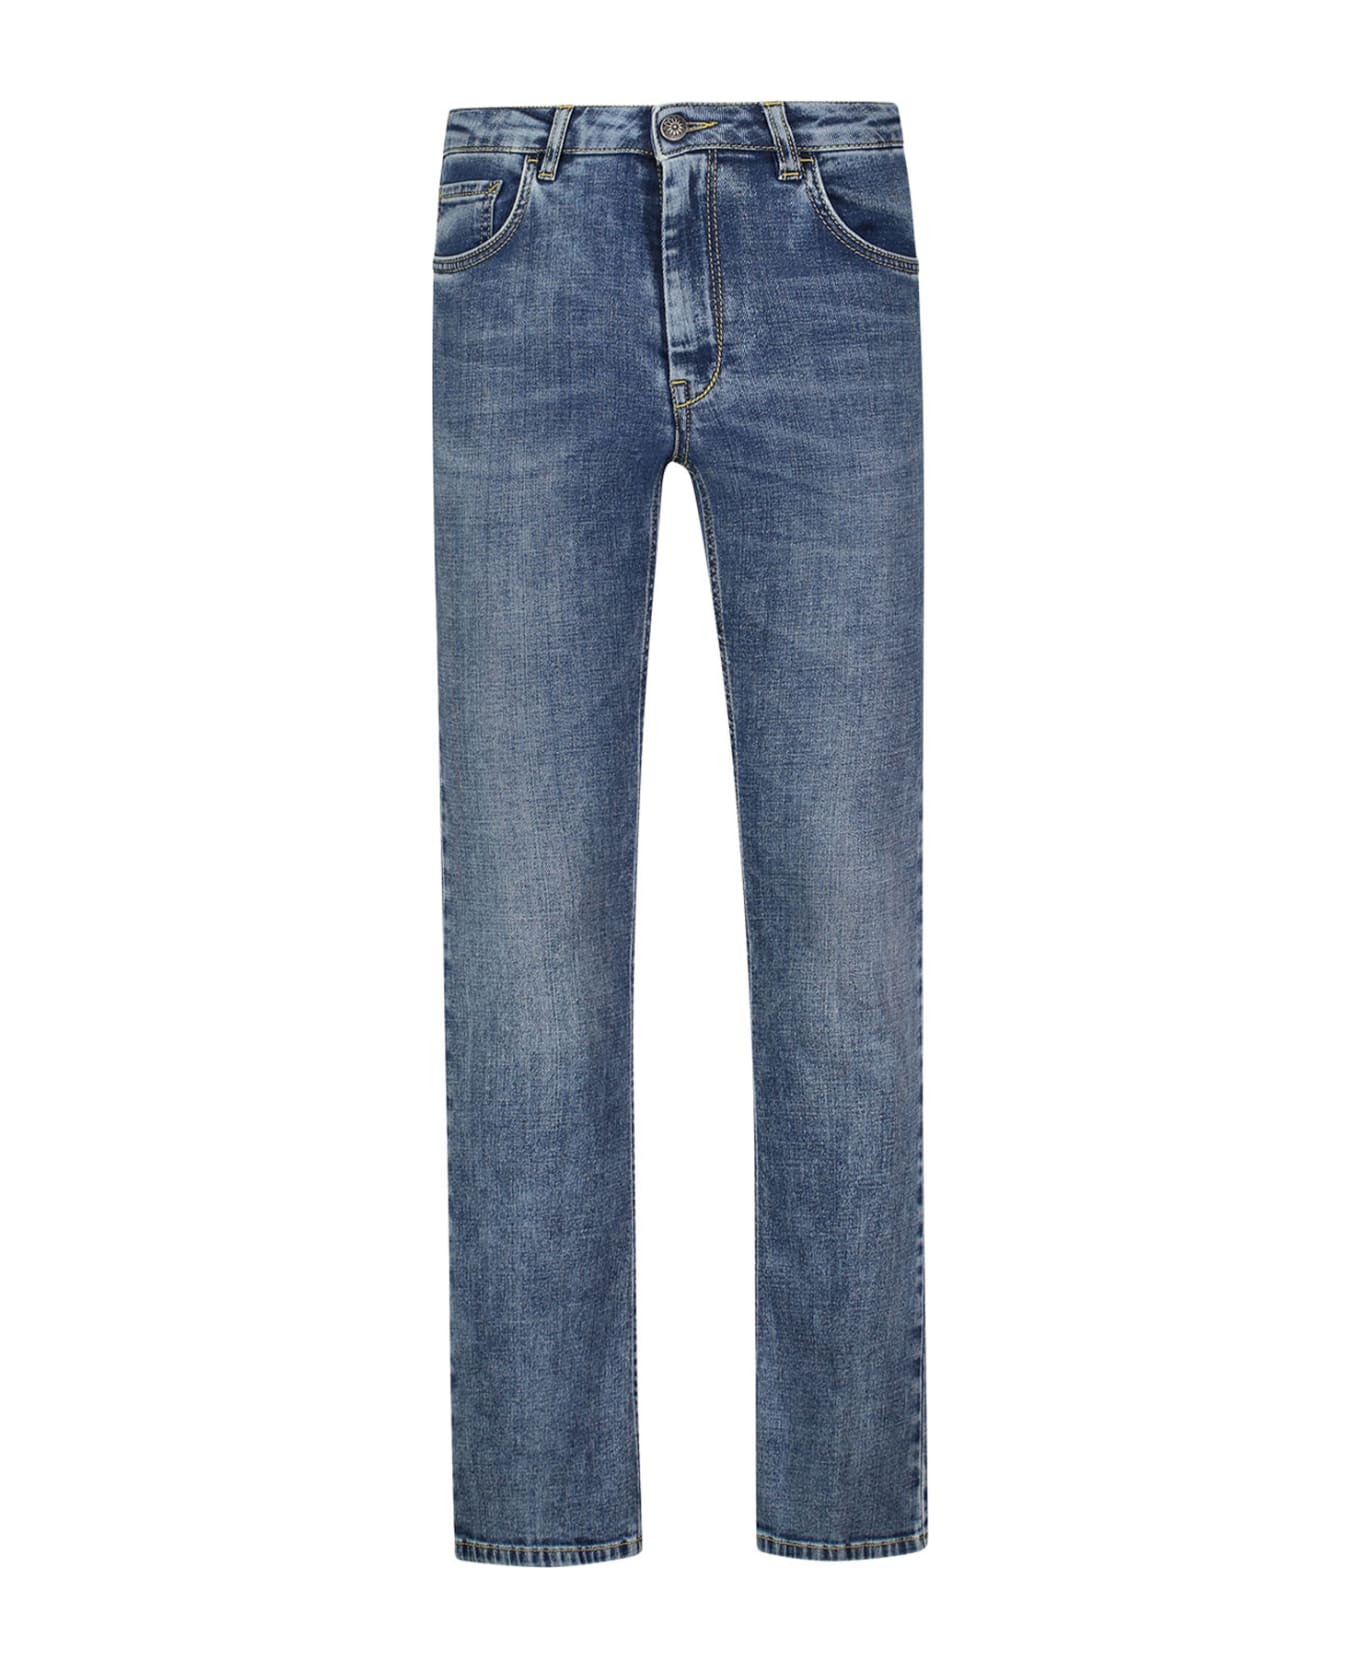 Re-HasH Slim Fit Jeans In Blue Denim - DENIM BLU